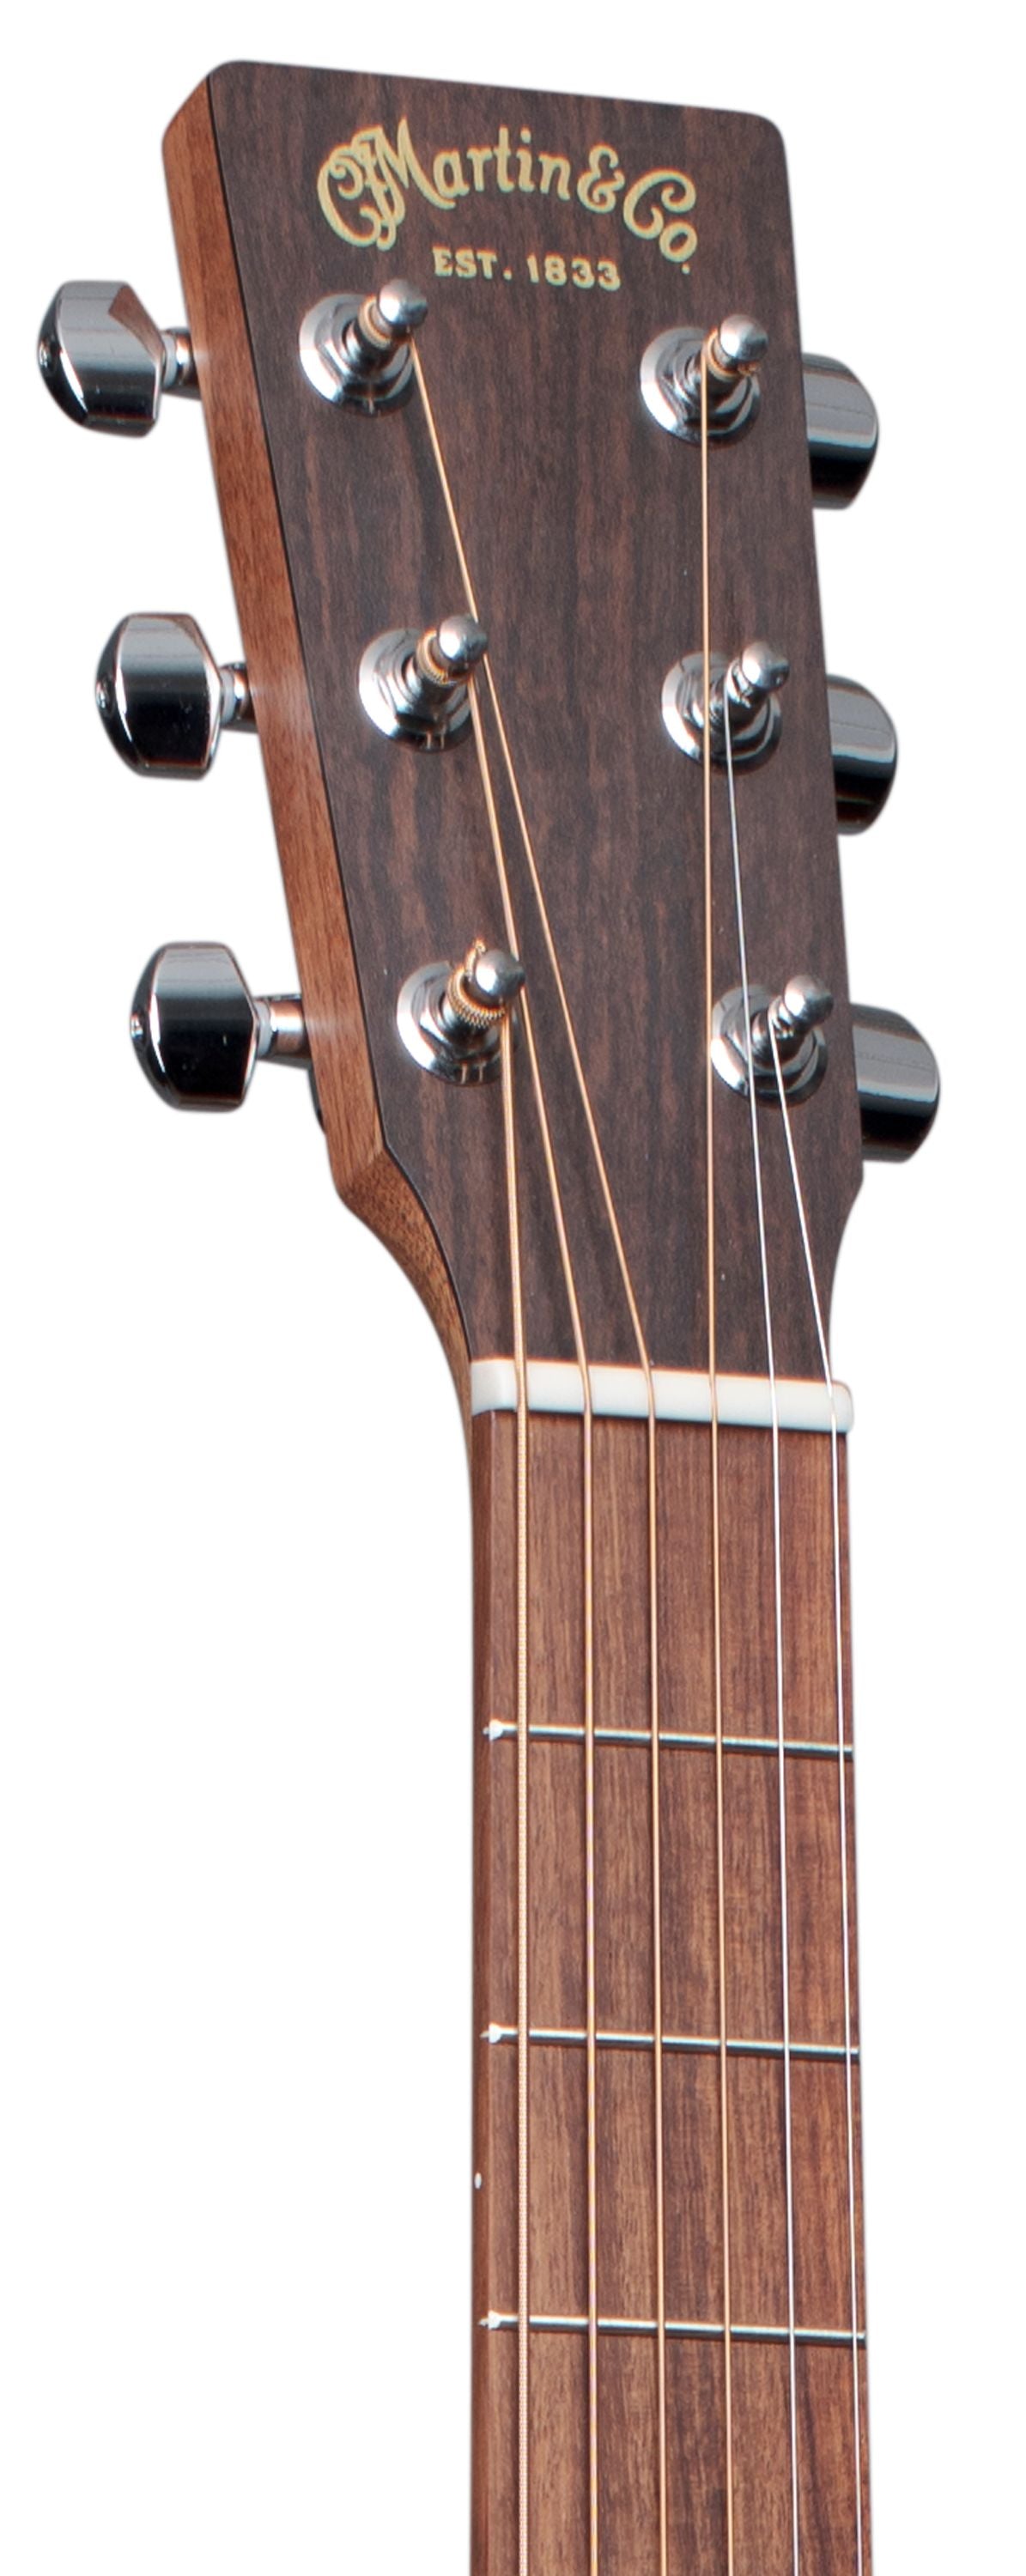 C. F. Martin DX2E-02 Mahogany Acoustic Guitar木結他